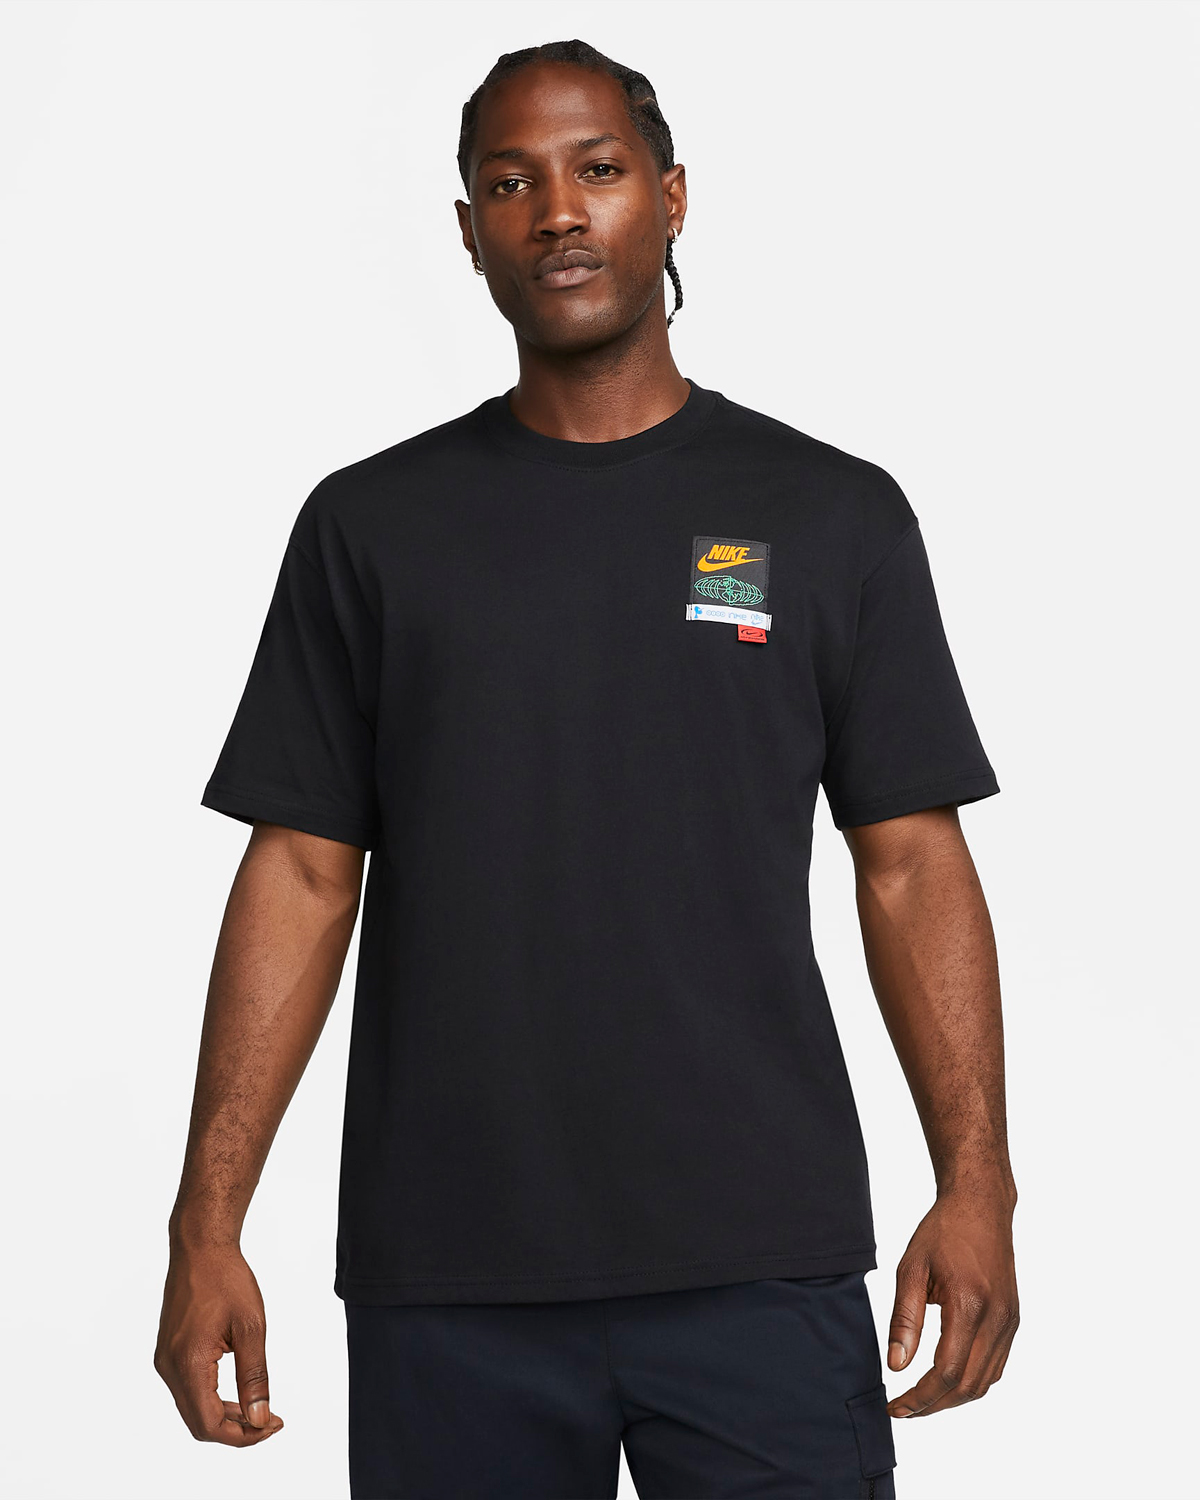 Nike-Sportswear-Max-90-Global-T-Shirt-Black-1